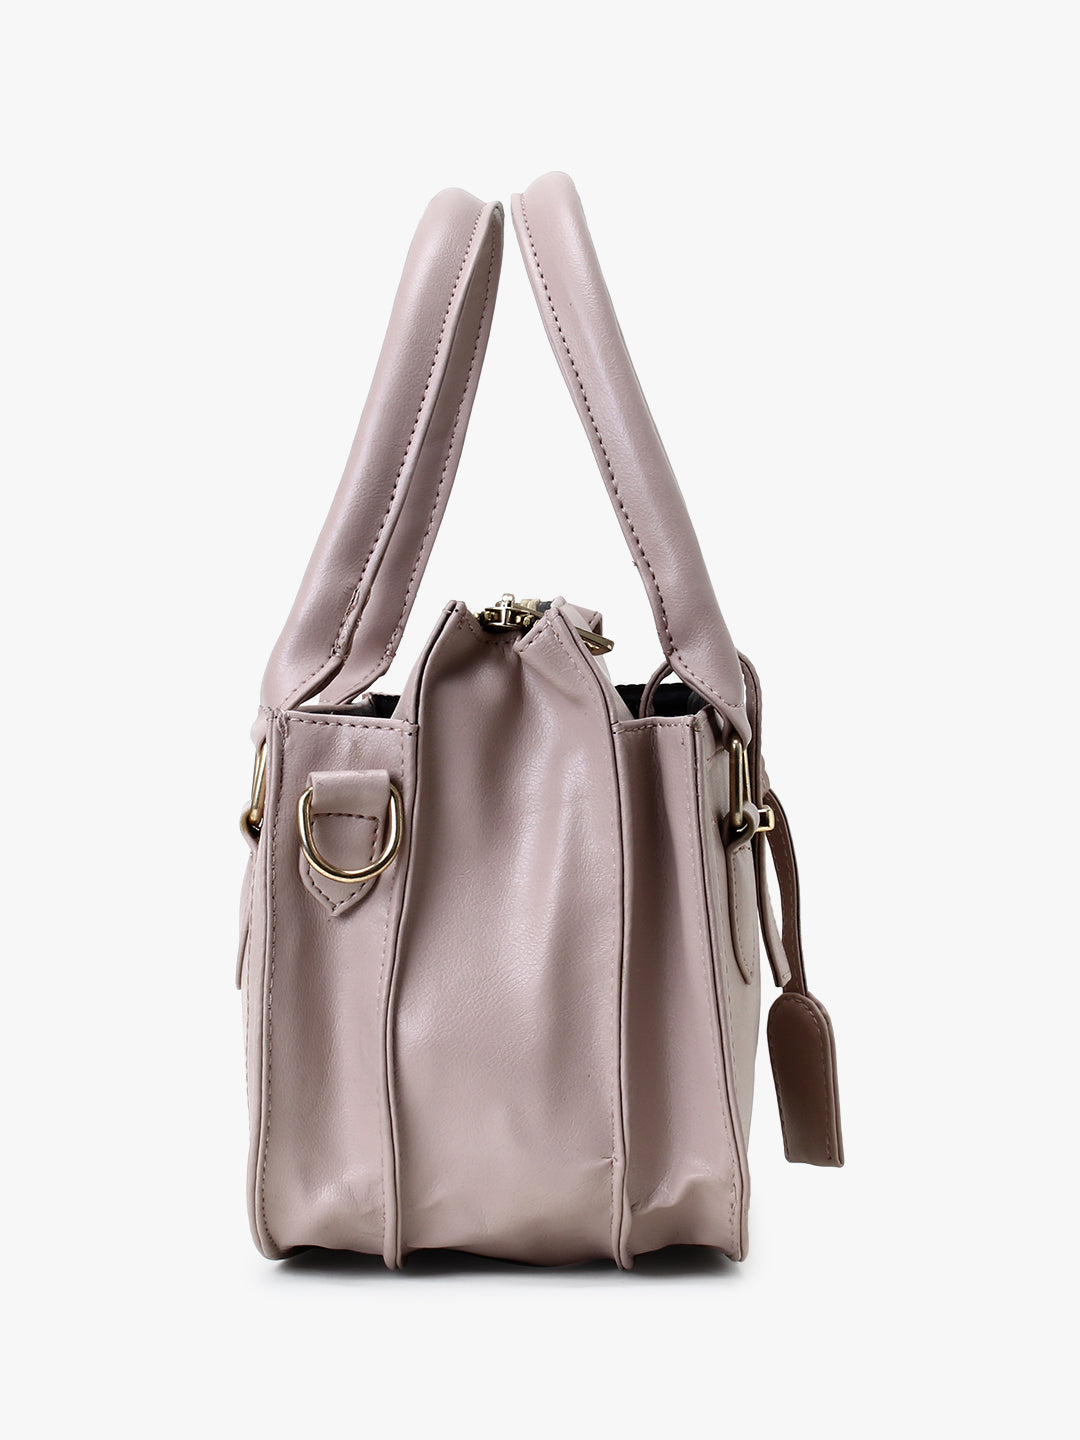 Pink satchel Handbag